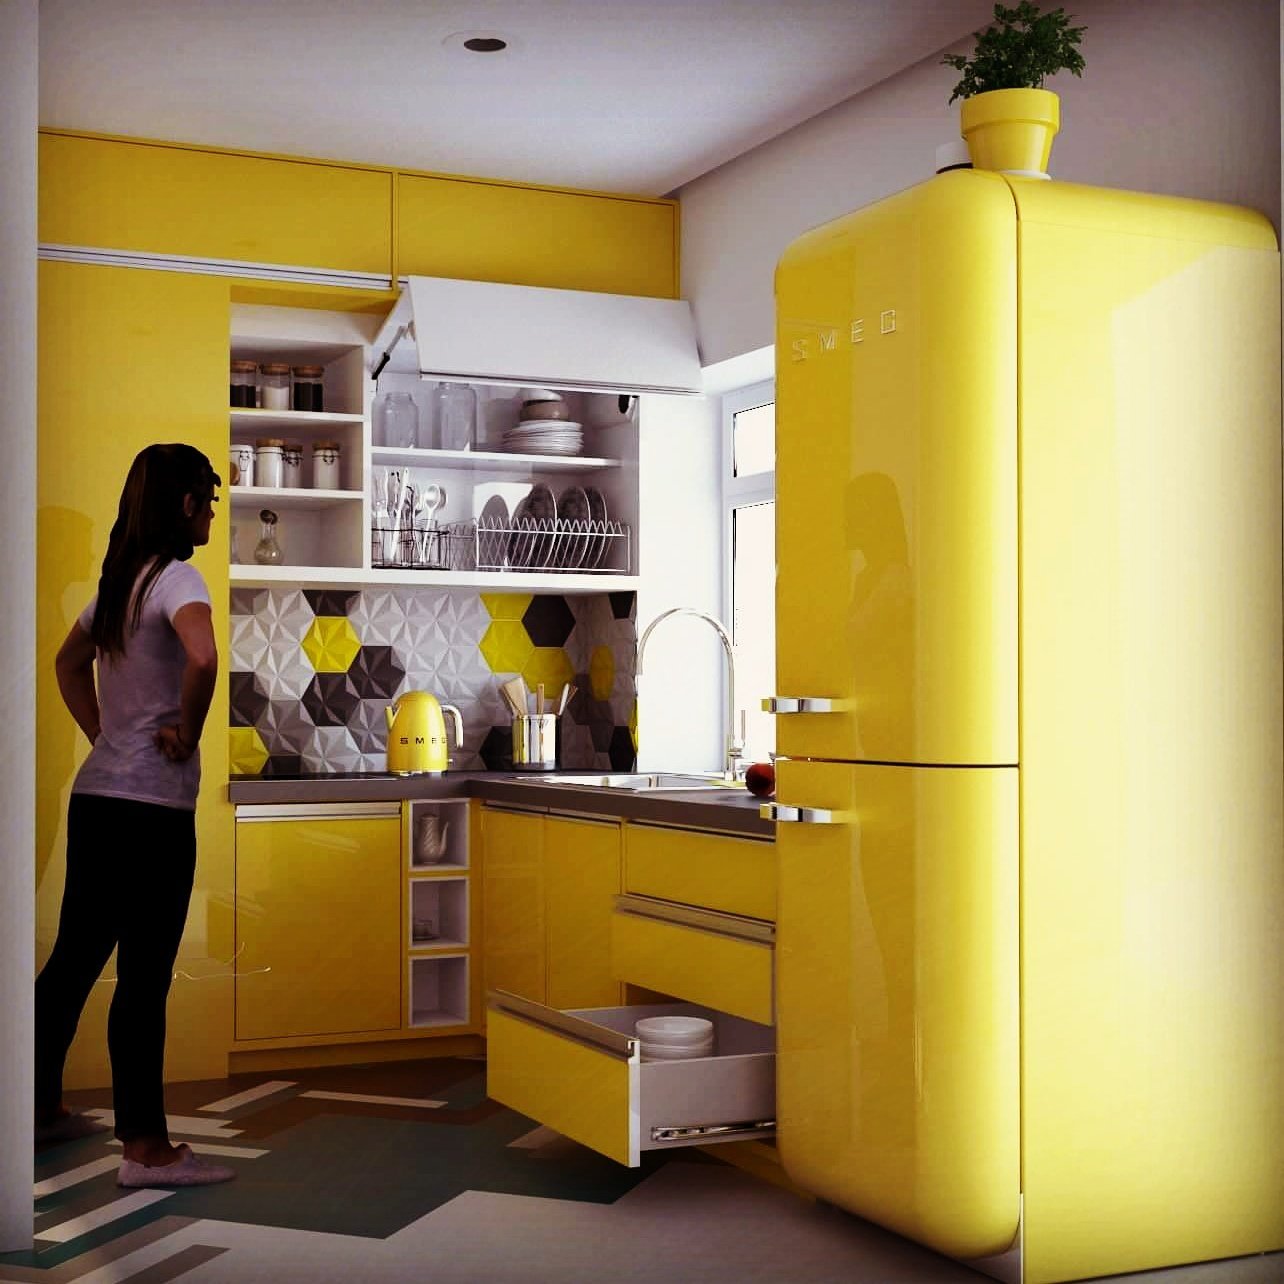 Купить желтую кухню. Холодильник Смег желтый. Холодильник Смег оранжевый. Холодильник Смег в интерьере. Желтый холодильник Smeg.